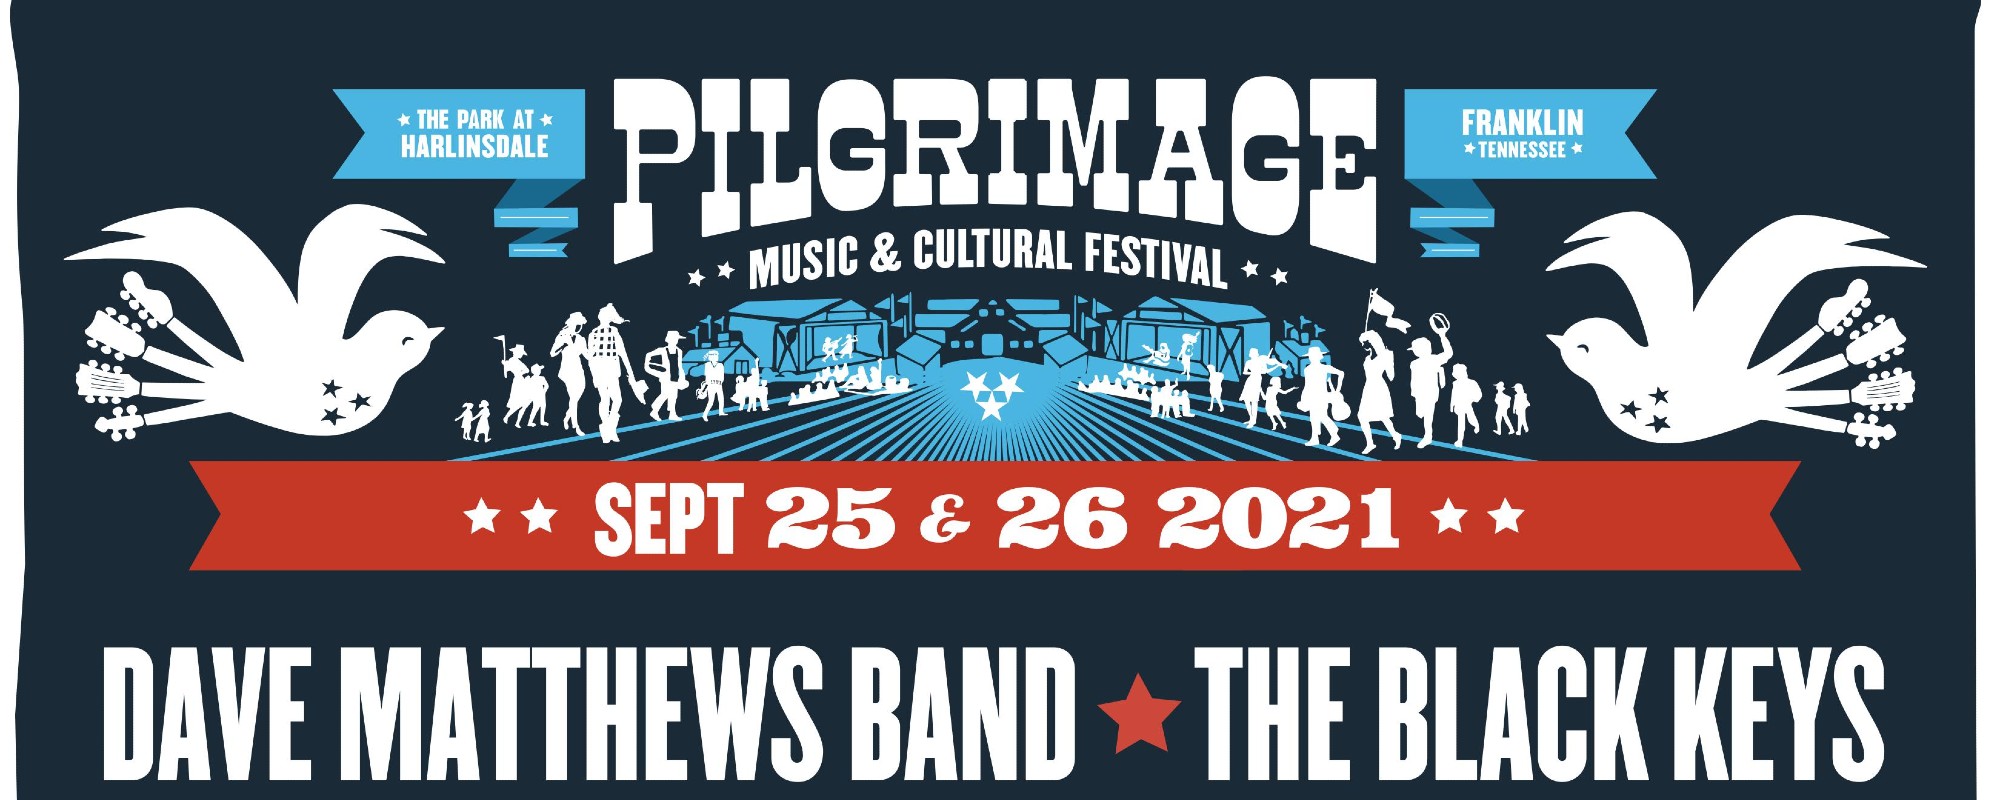 Dave Matthews Band, Maren Morris Lead Lineup For 2021 Pilgrimage Music & Cultural Festival